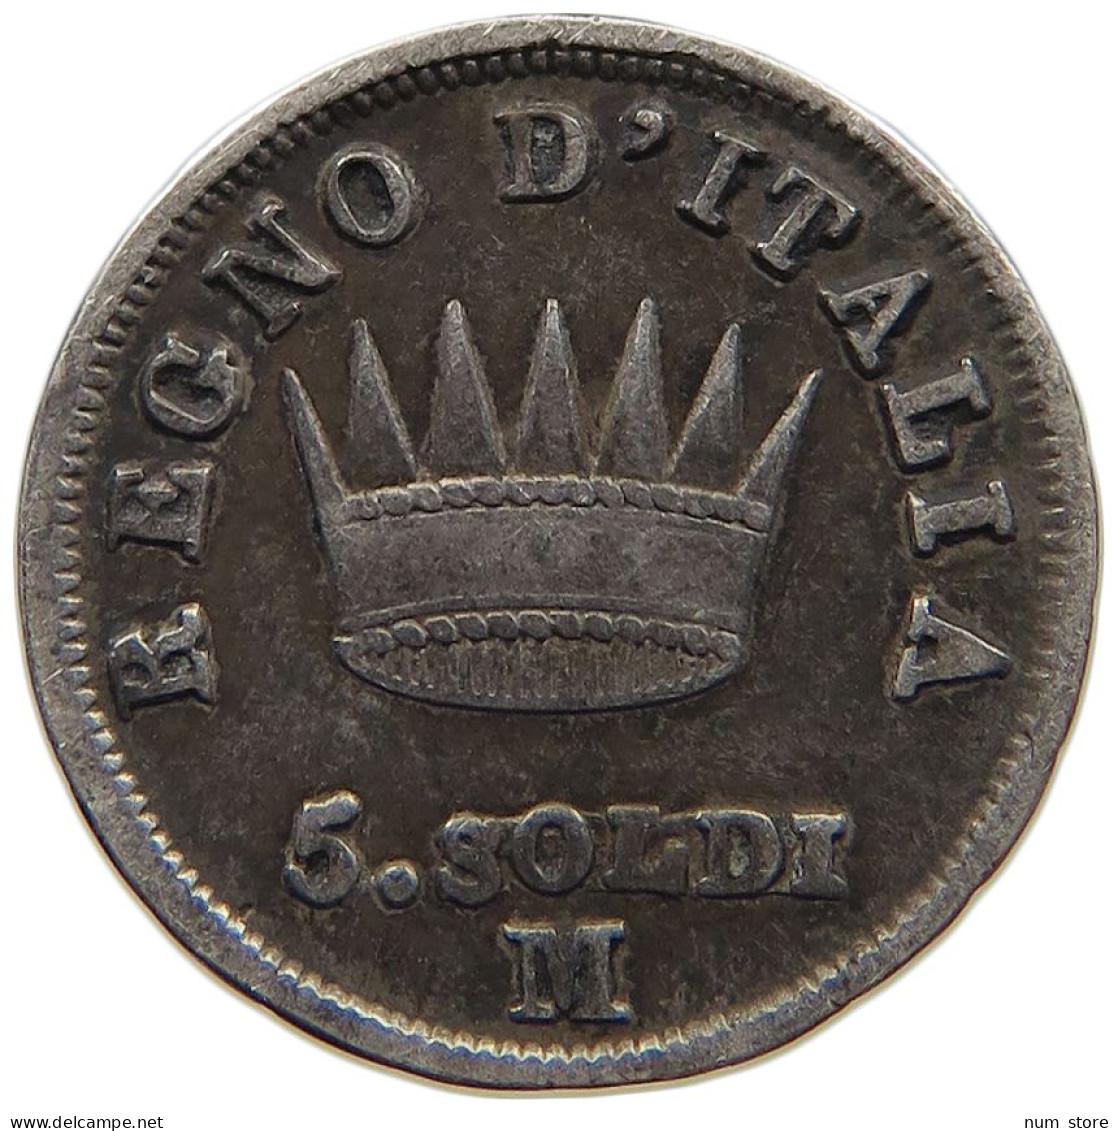 ITALY STATES NAPOLEON I. 5 SOLDI 1813 M Napoleon I. (1804-1814, 1815) #t006 0187 - Napoleonic